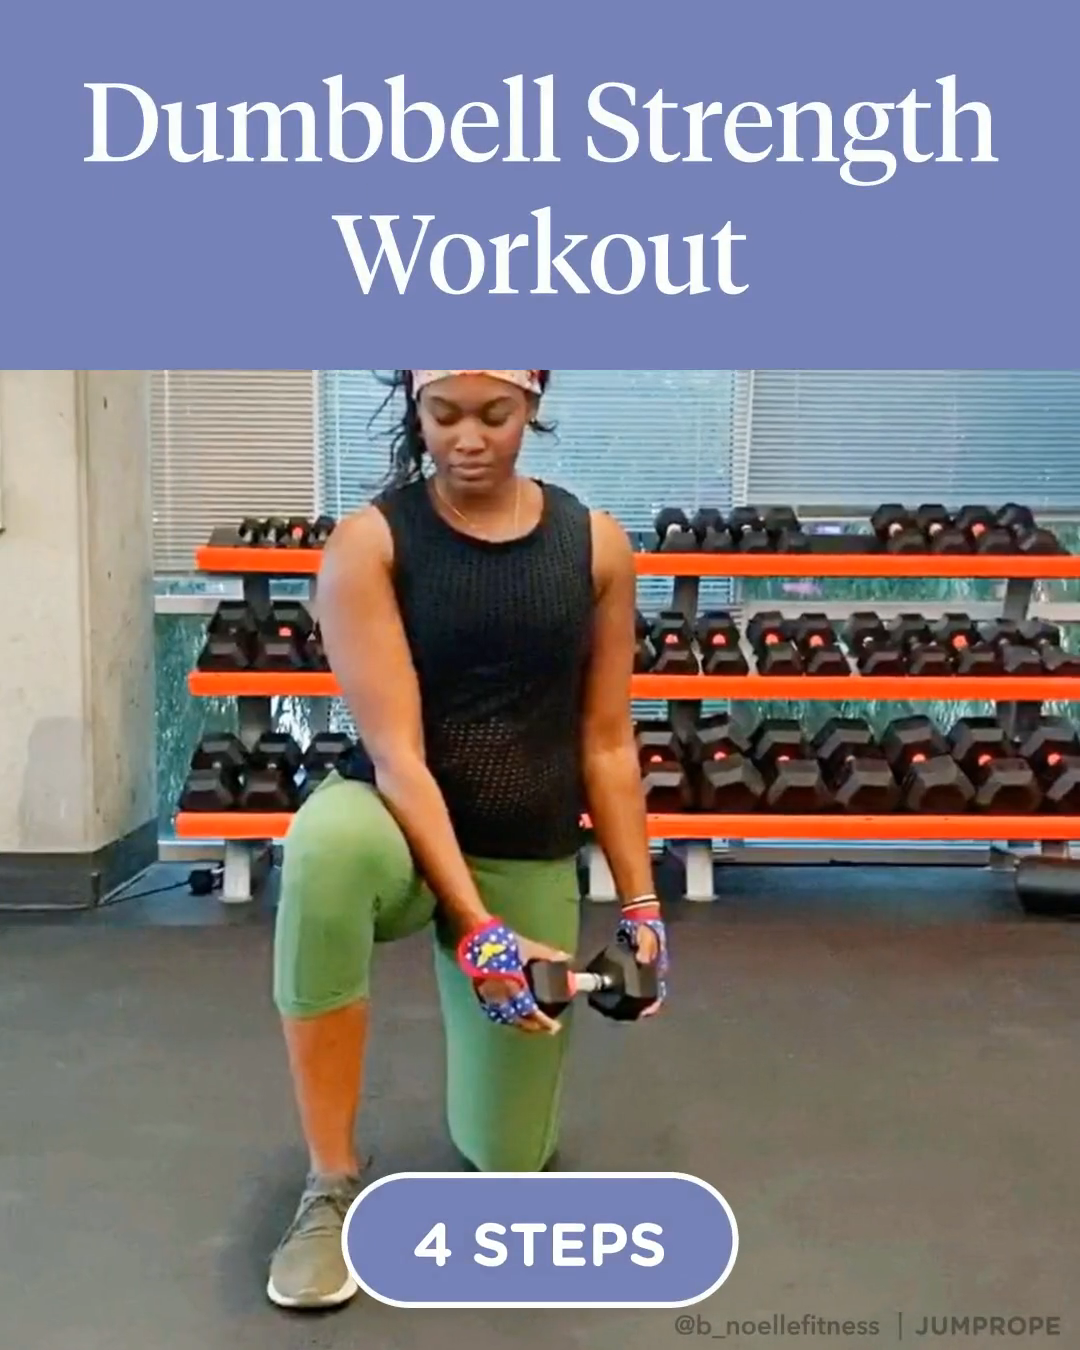 Dumbbell Strength Workout - Dumbbell Strength Workout -   10 fitness Instagram challenge ideas